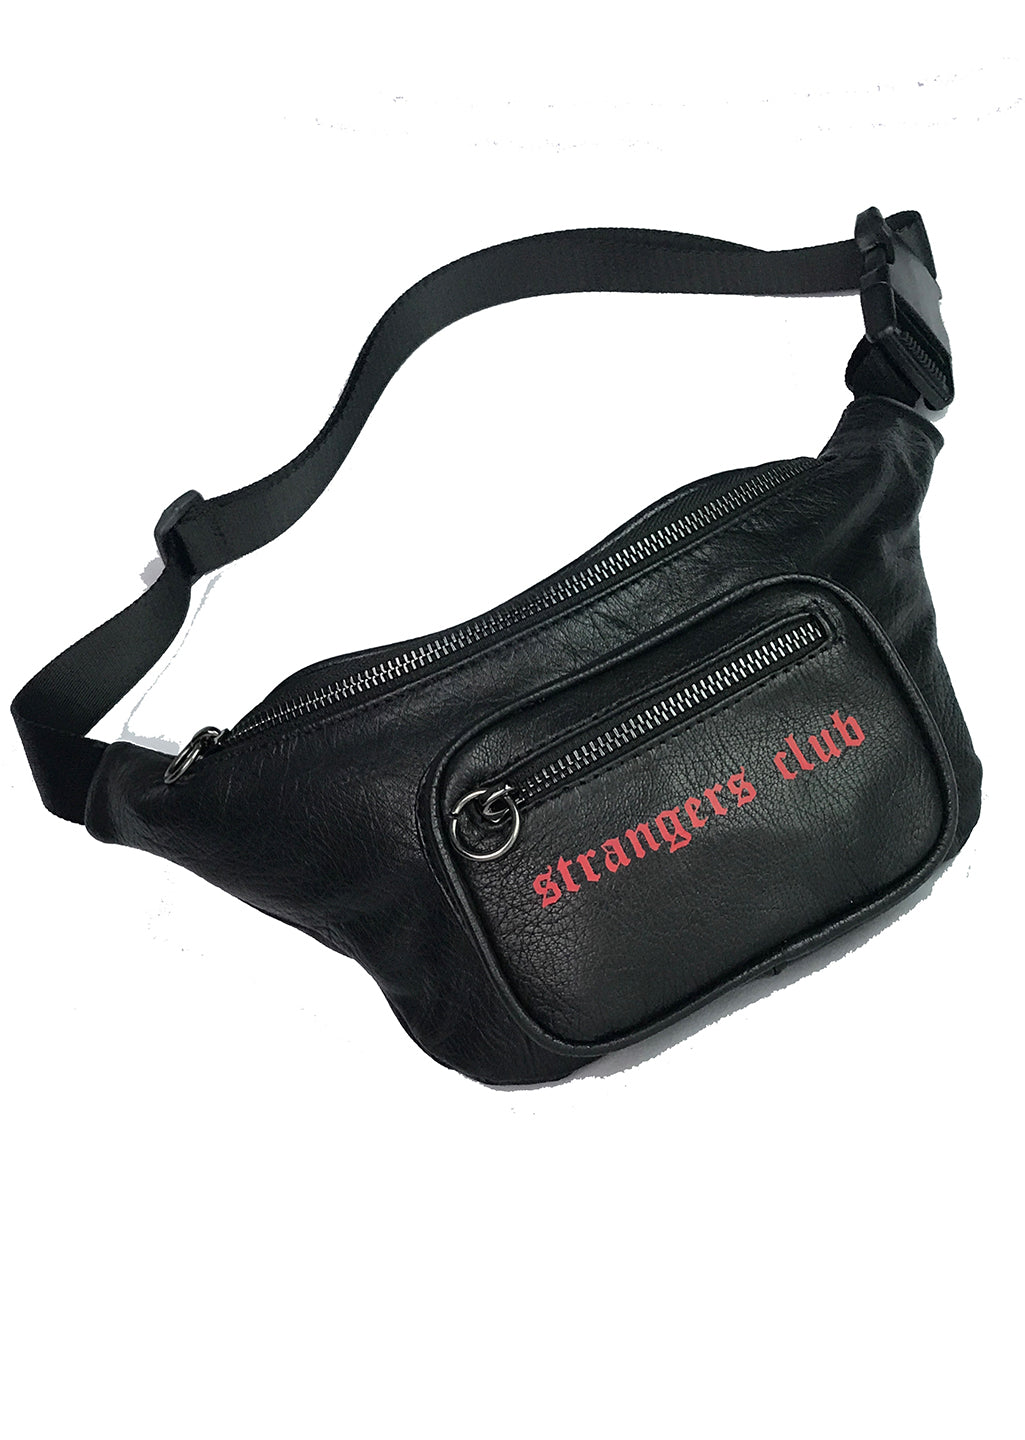 Strangers Club / Leather Belt Bag